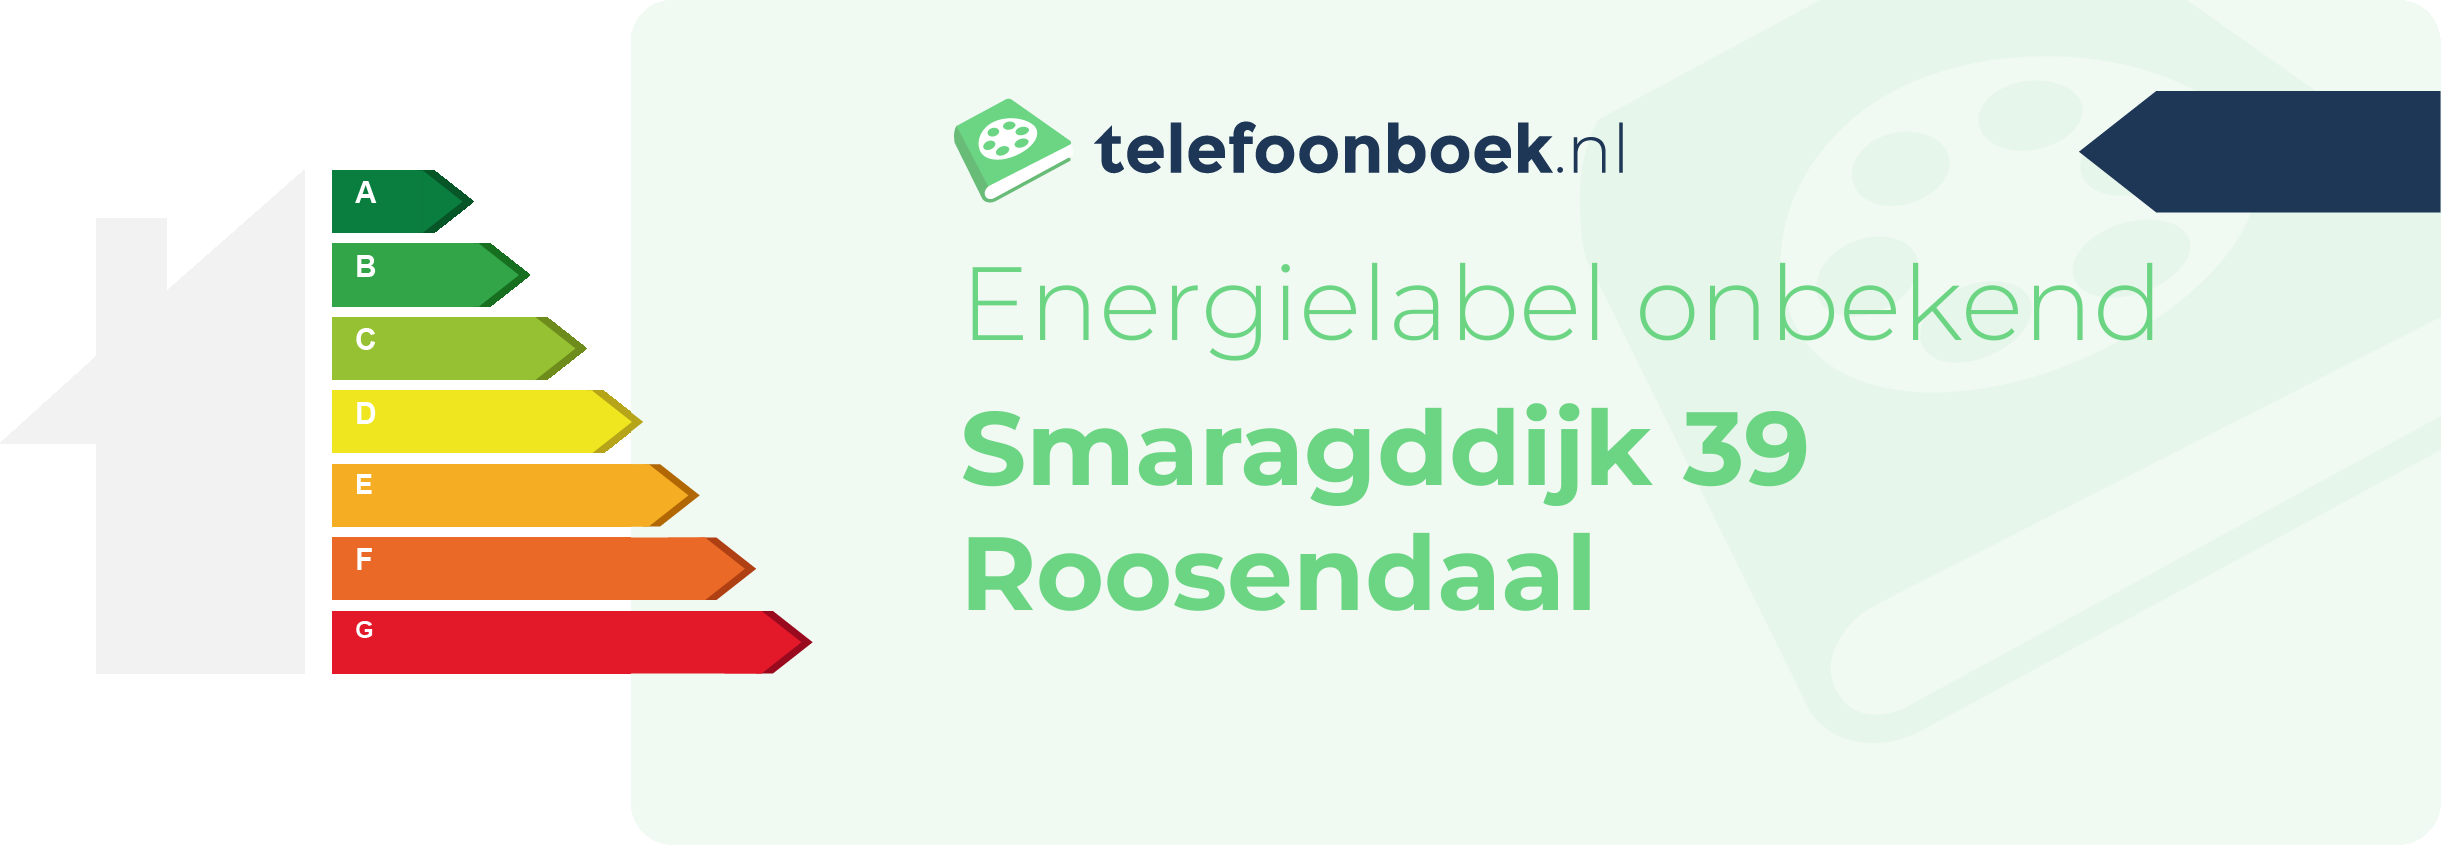 Energielabel Smaragddijk 39 Roosendaal